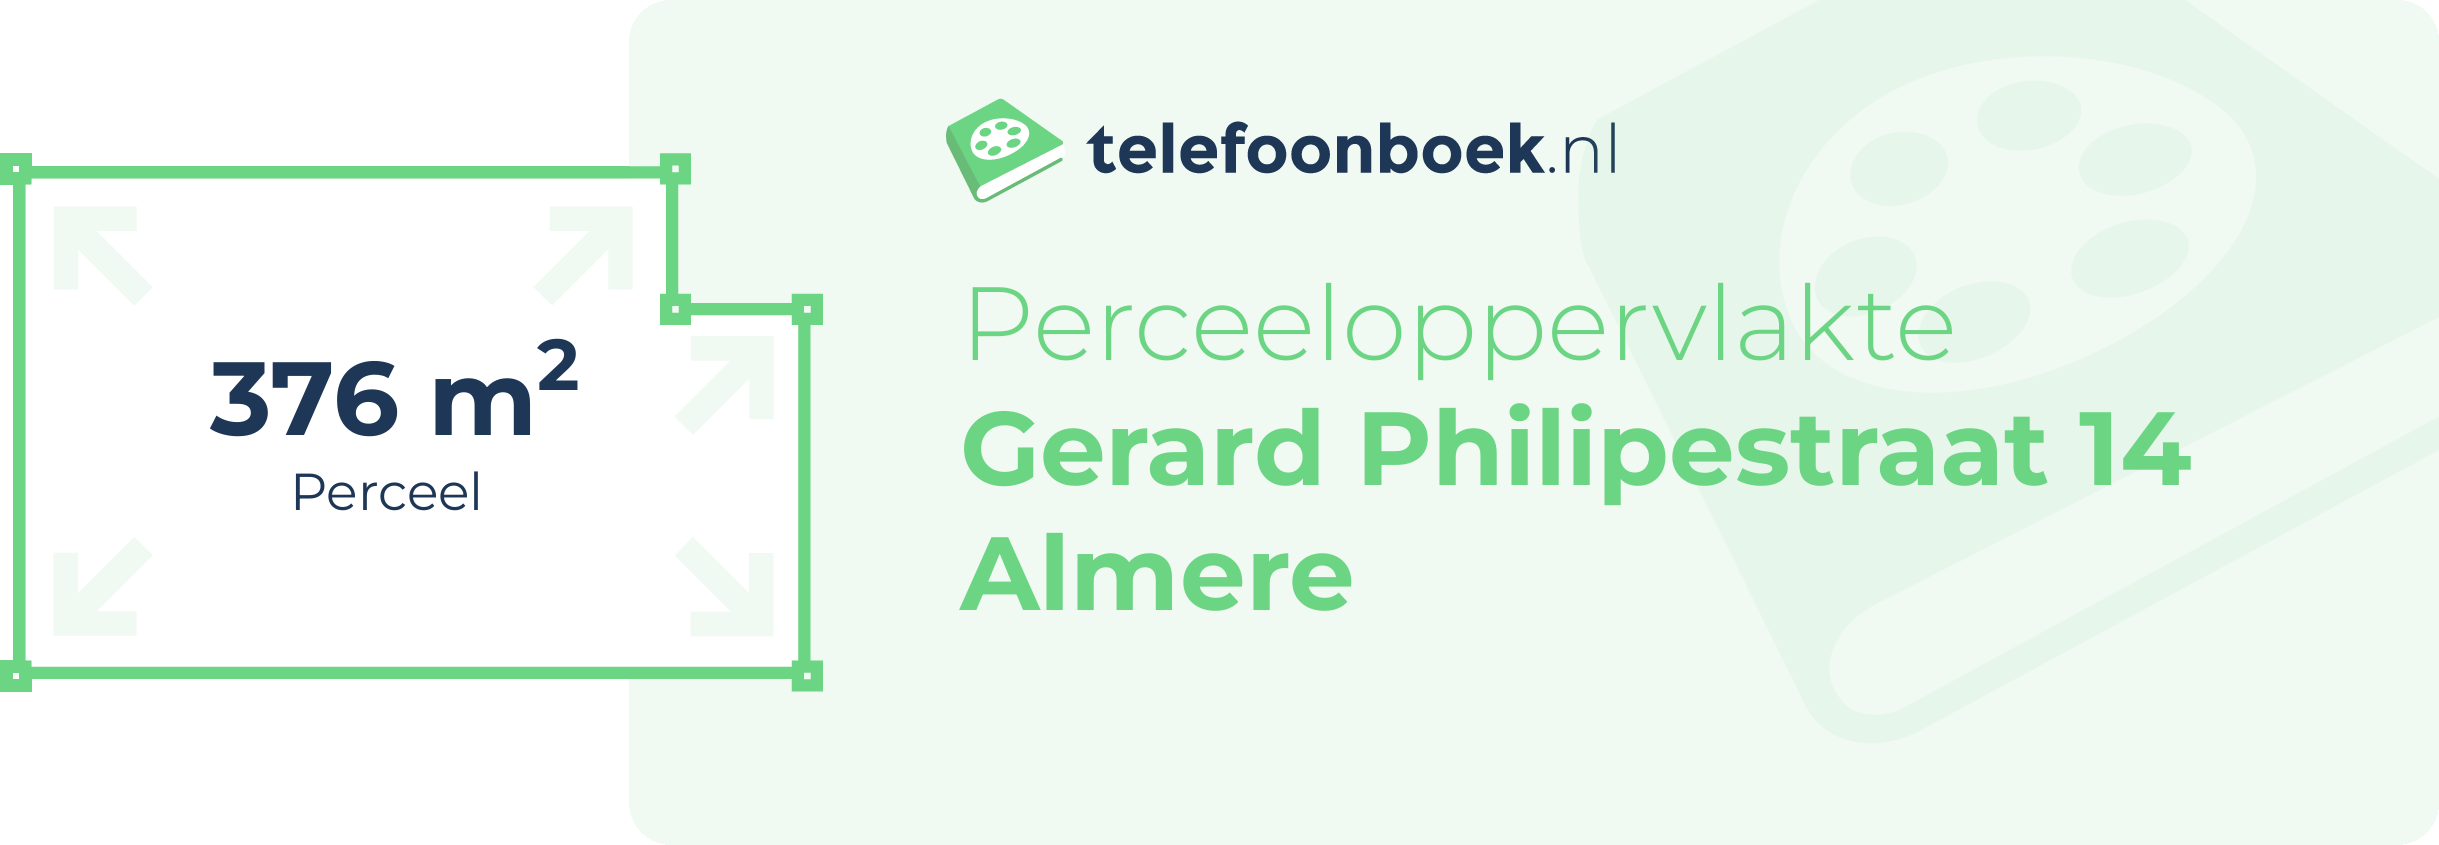 Perceeloppervlakte Gerard Philipestraat 14 Almere